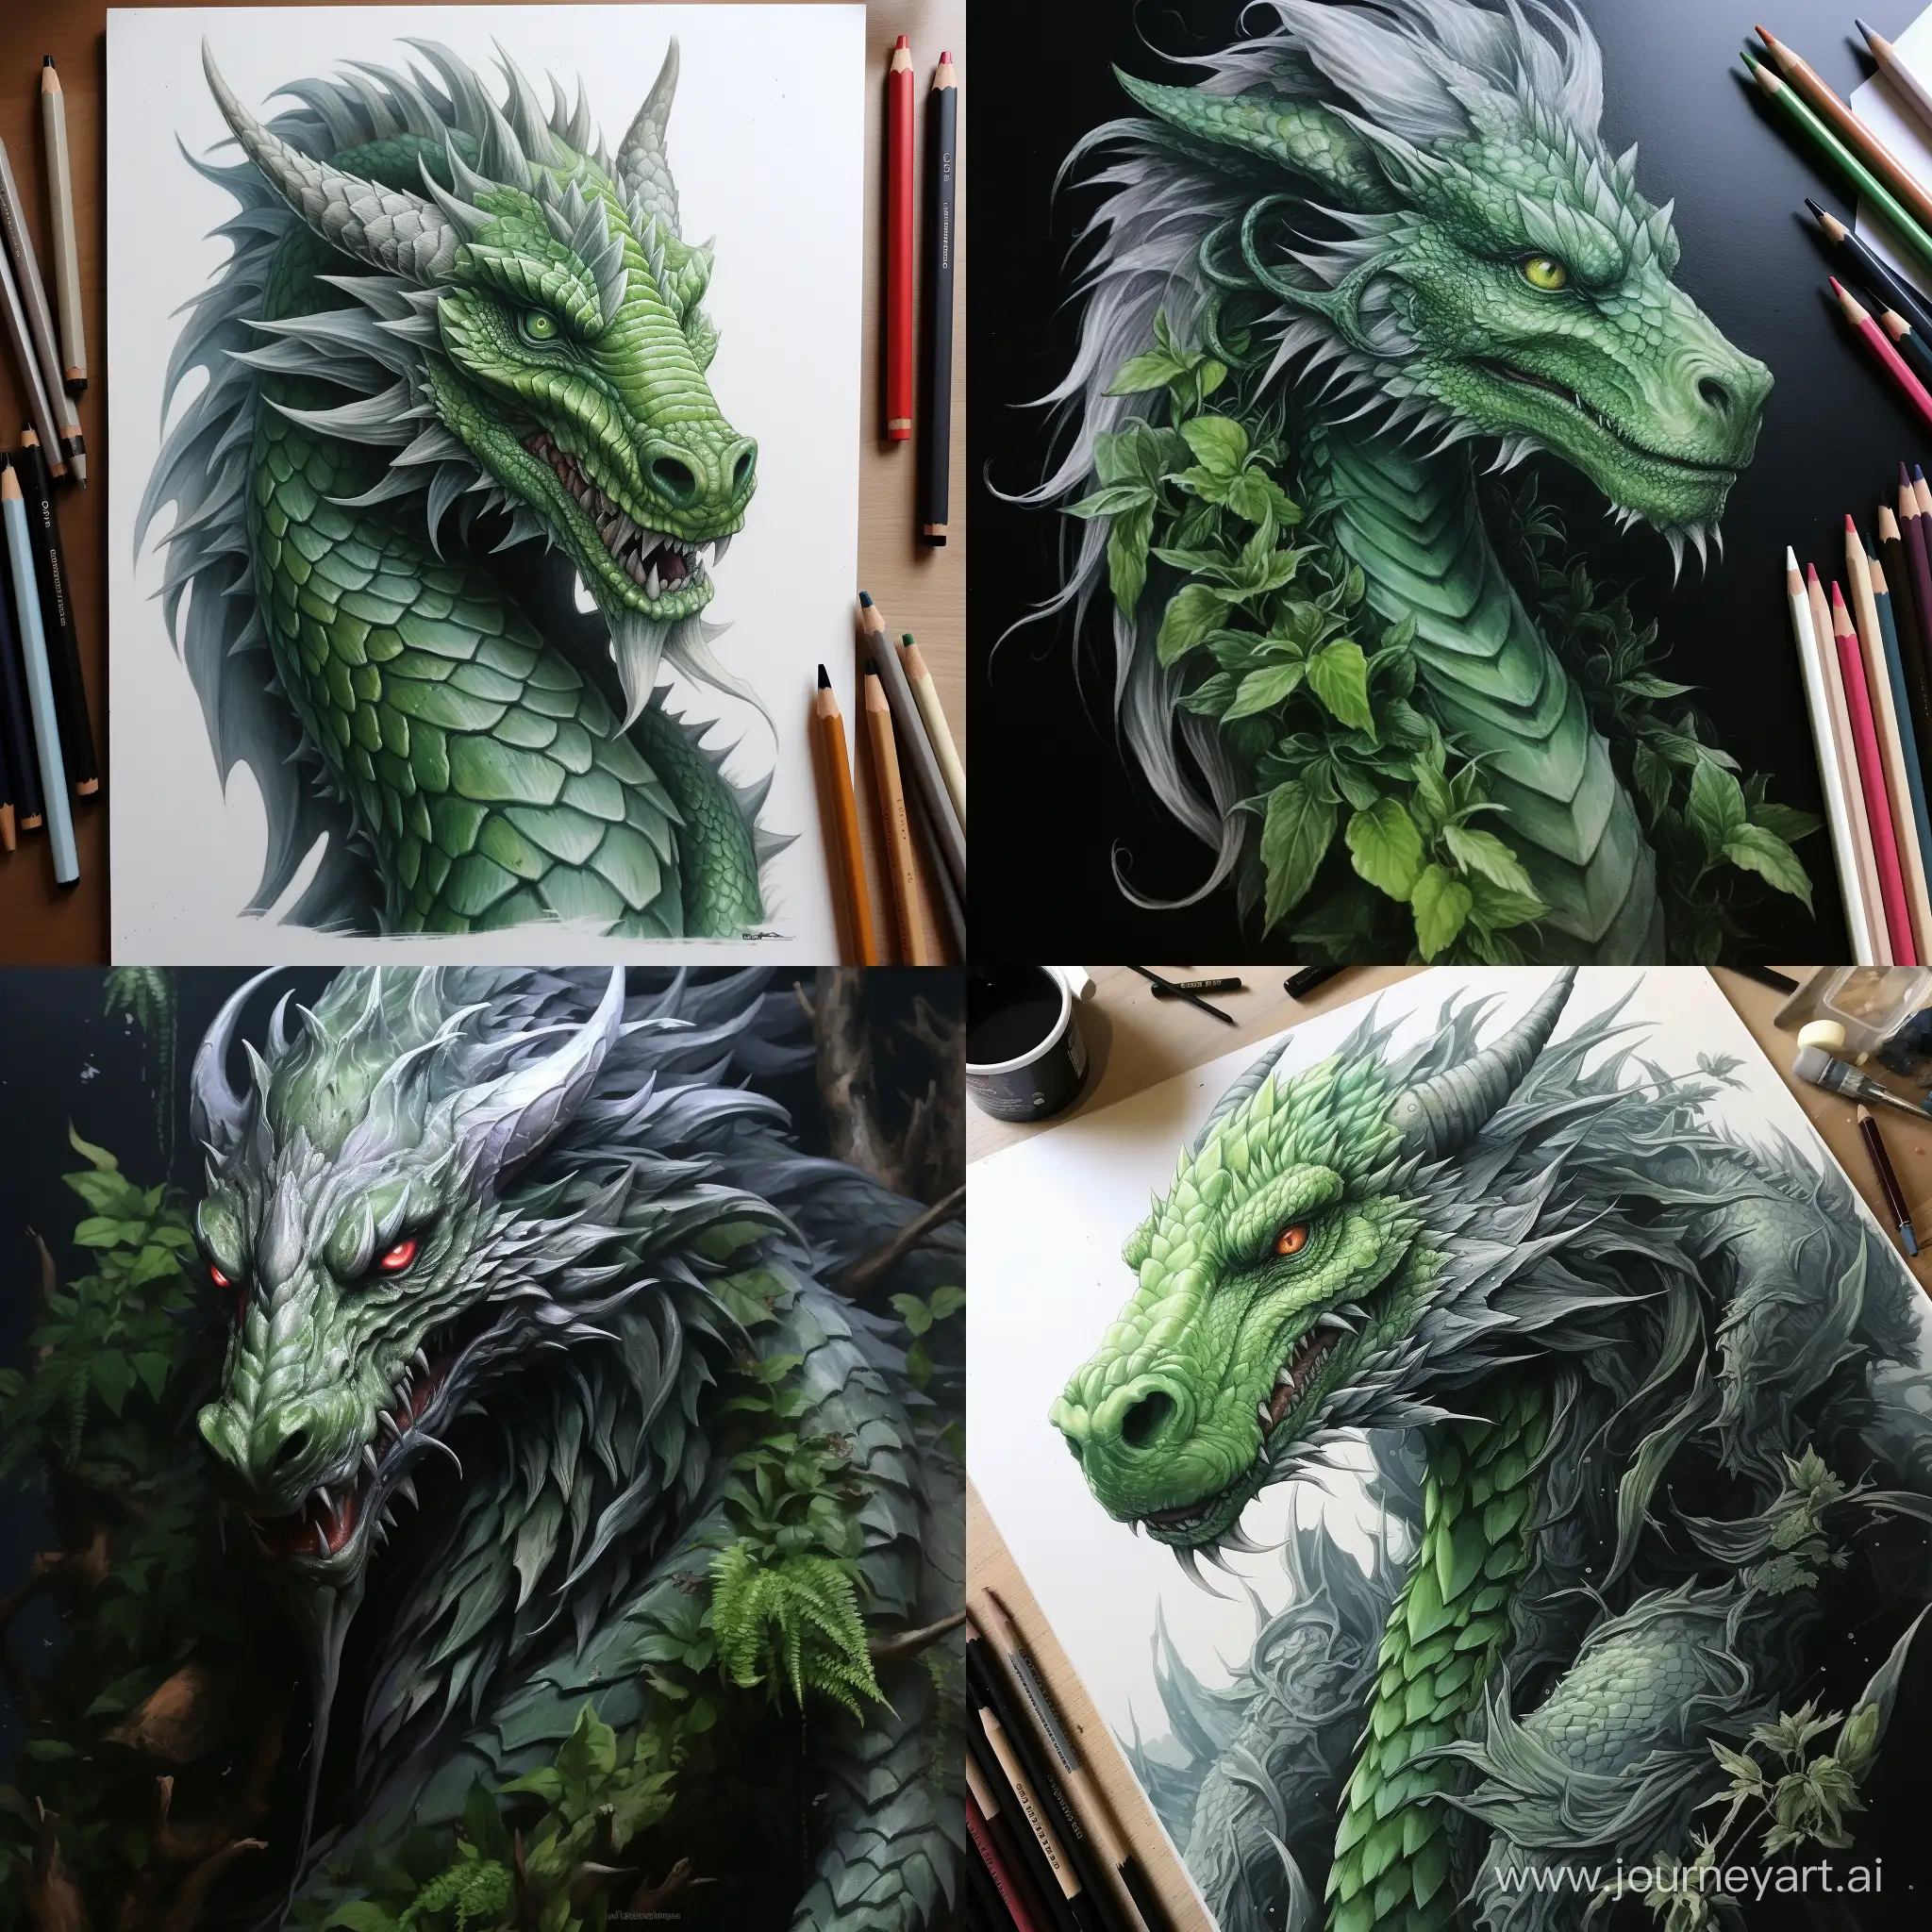 The green beautiful dragon looks forward hyperrealistic
